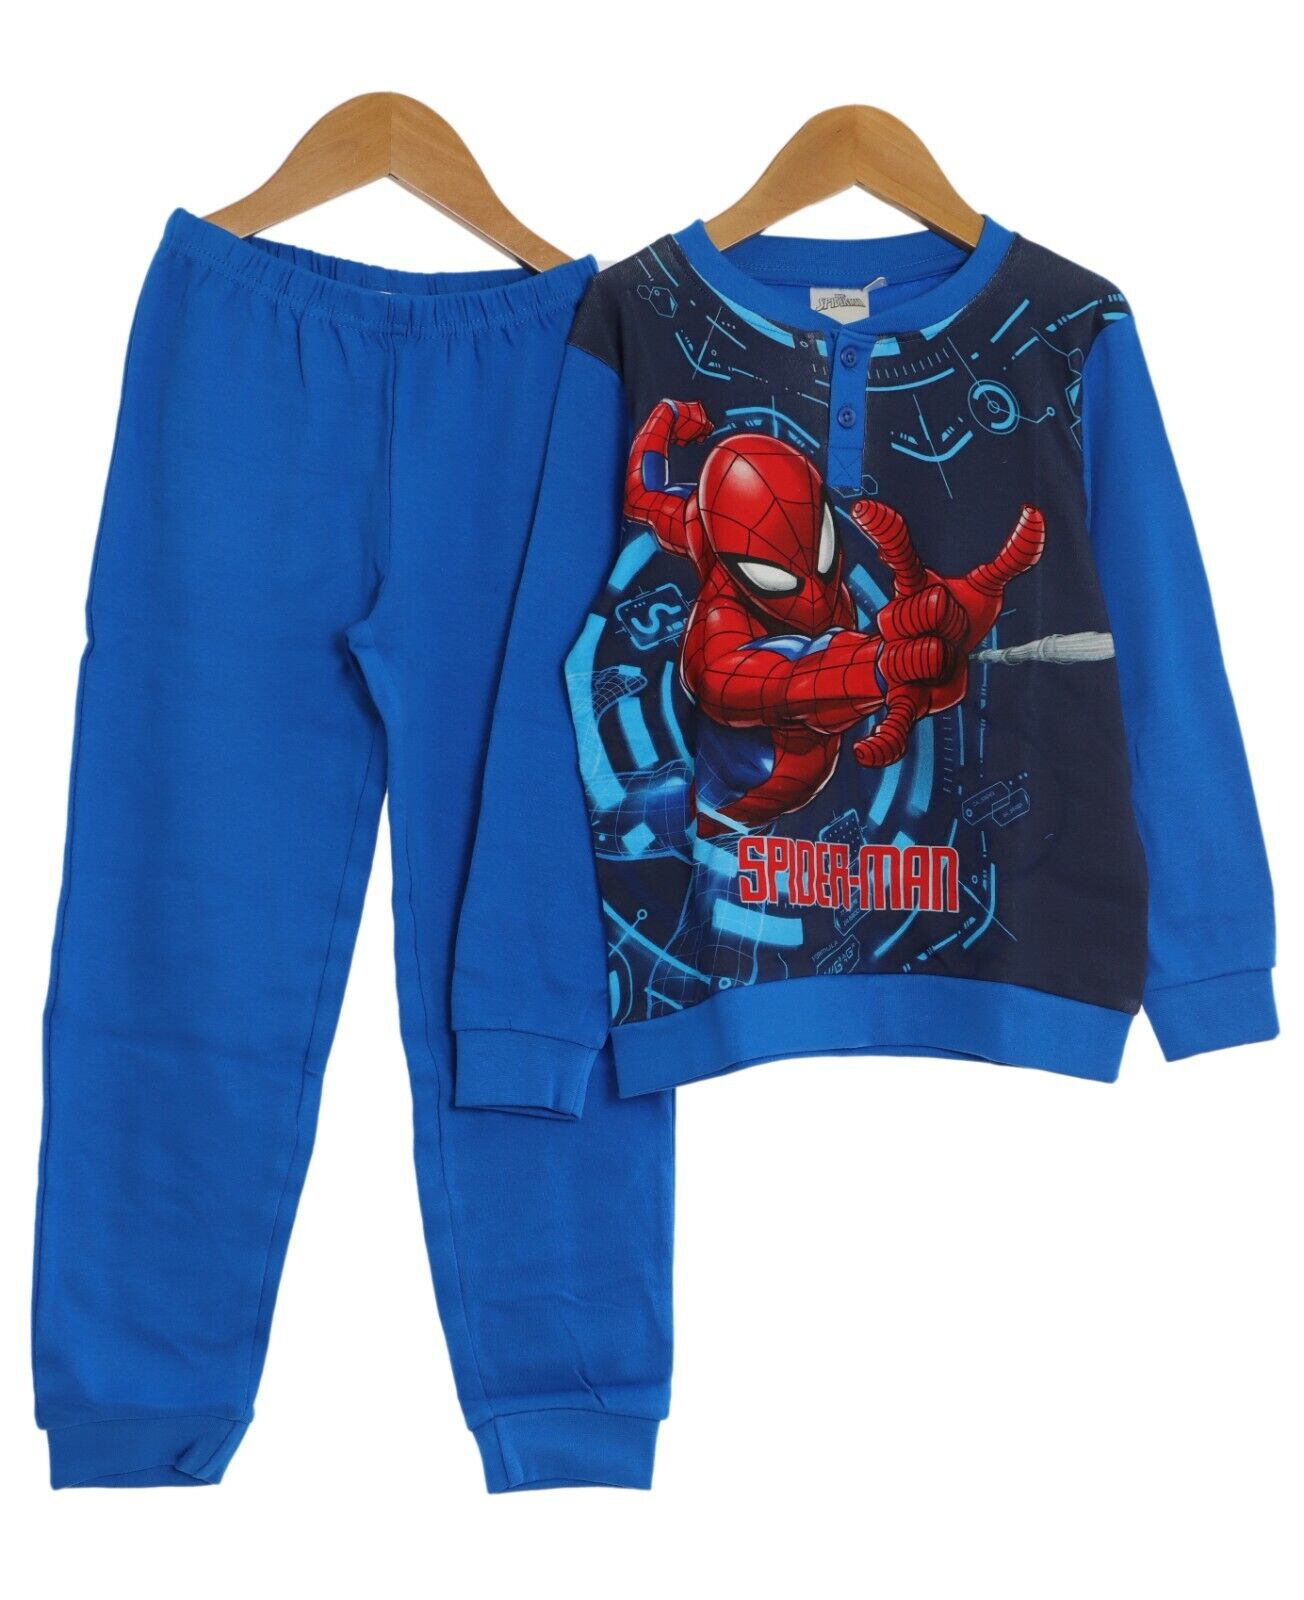 Pigiama Disney Bambino Caldo Cotone Interlock Spiderman Royal/Blu 100% Cotone (3132)